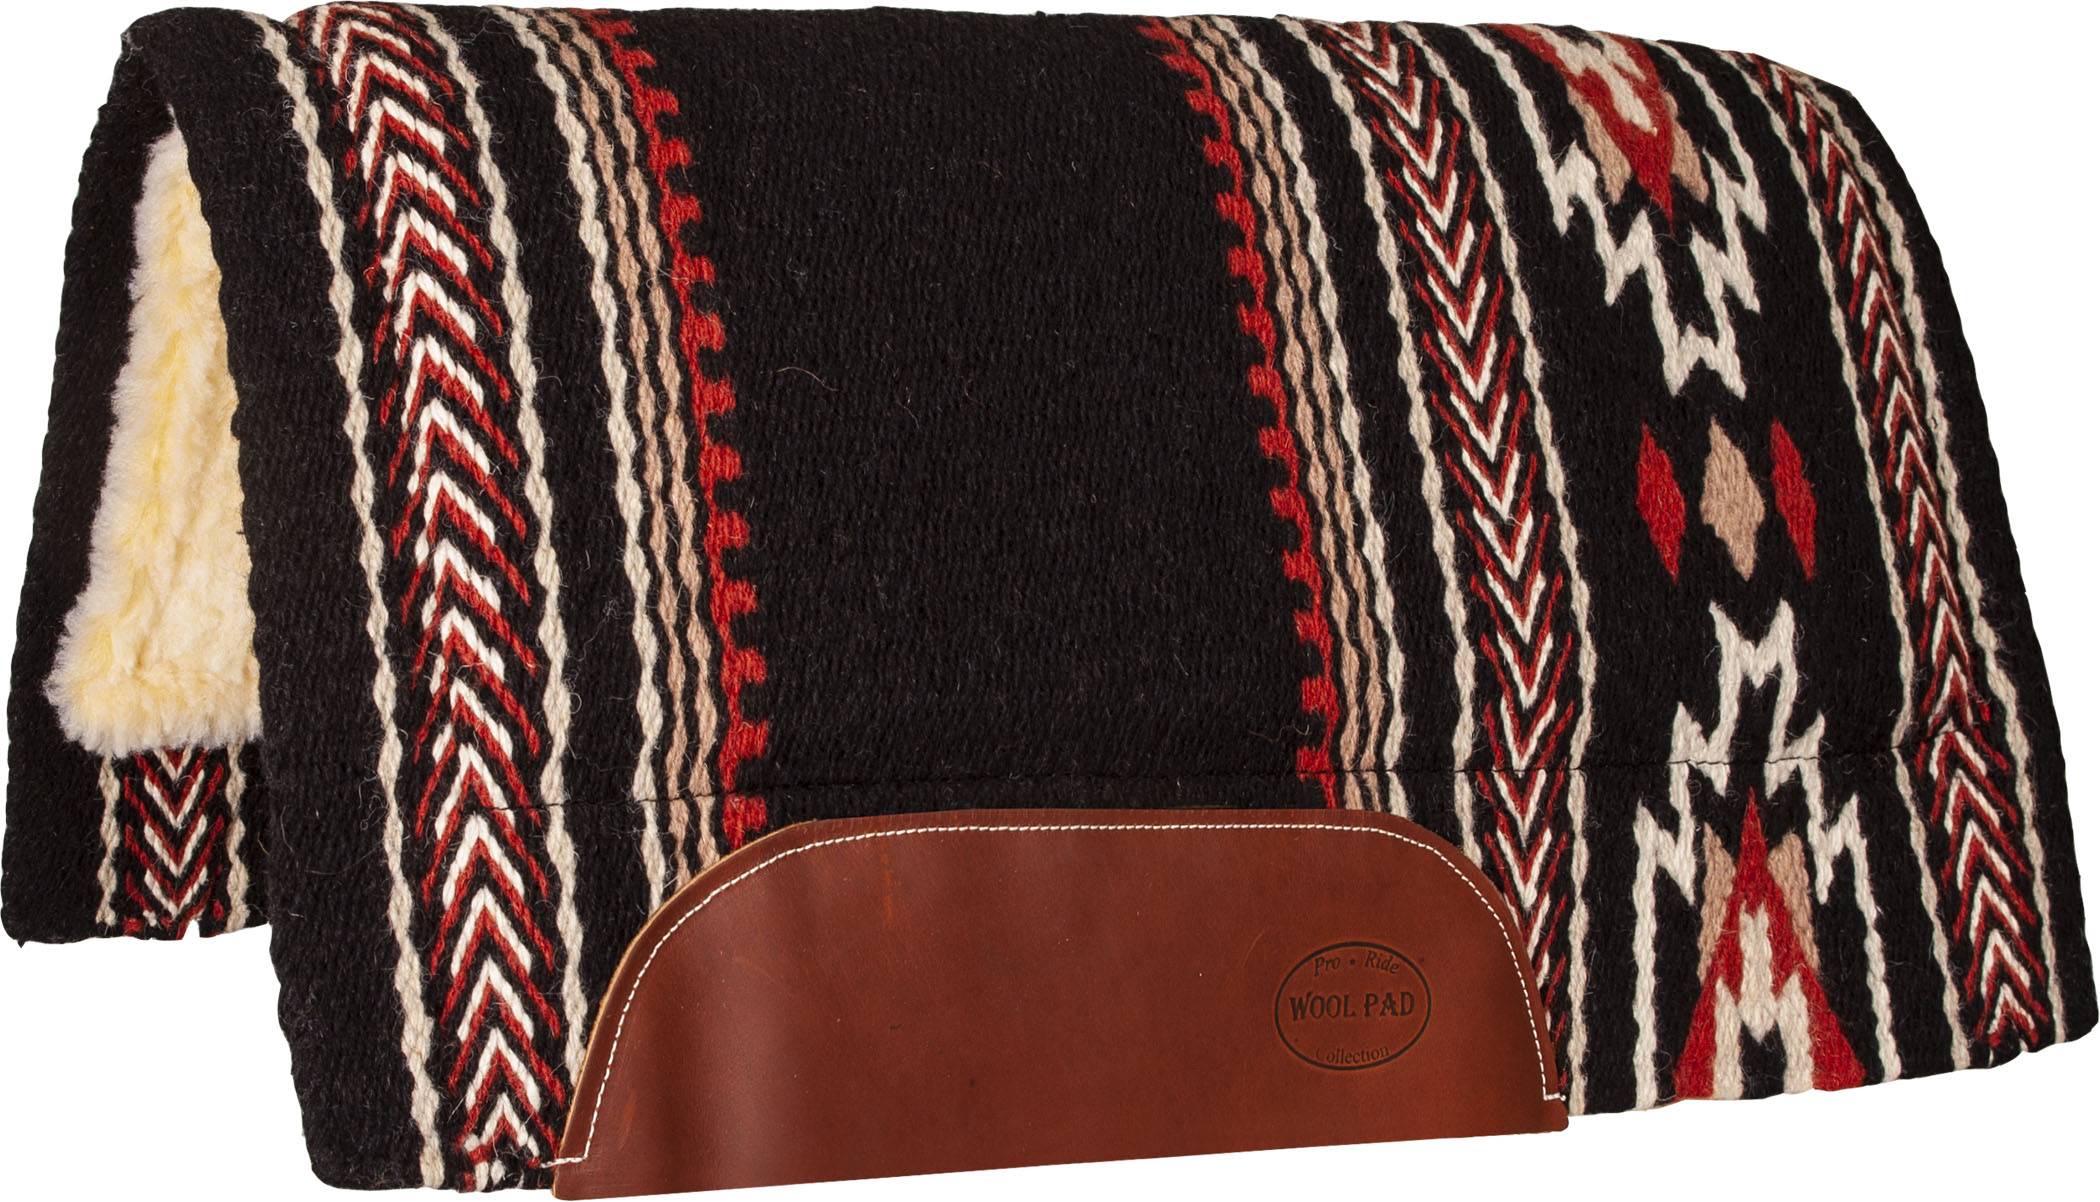 Mustang Temecula 100% New Zealand Wool Show Pad with Fleece Bottom